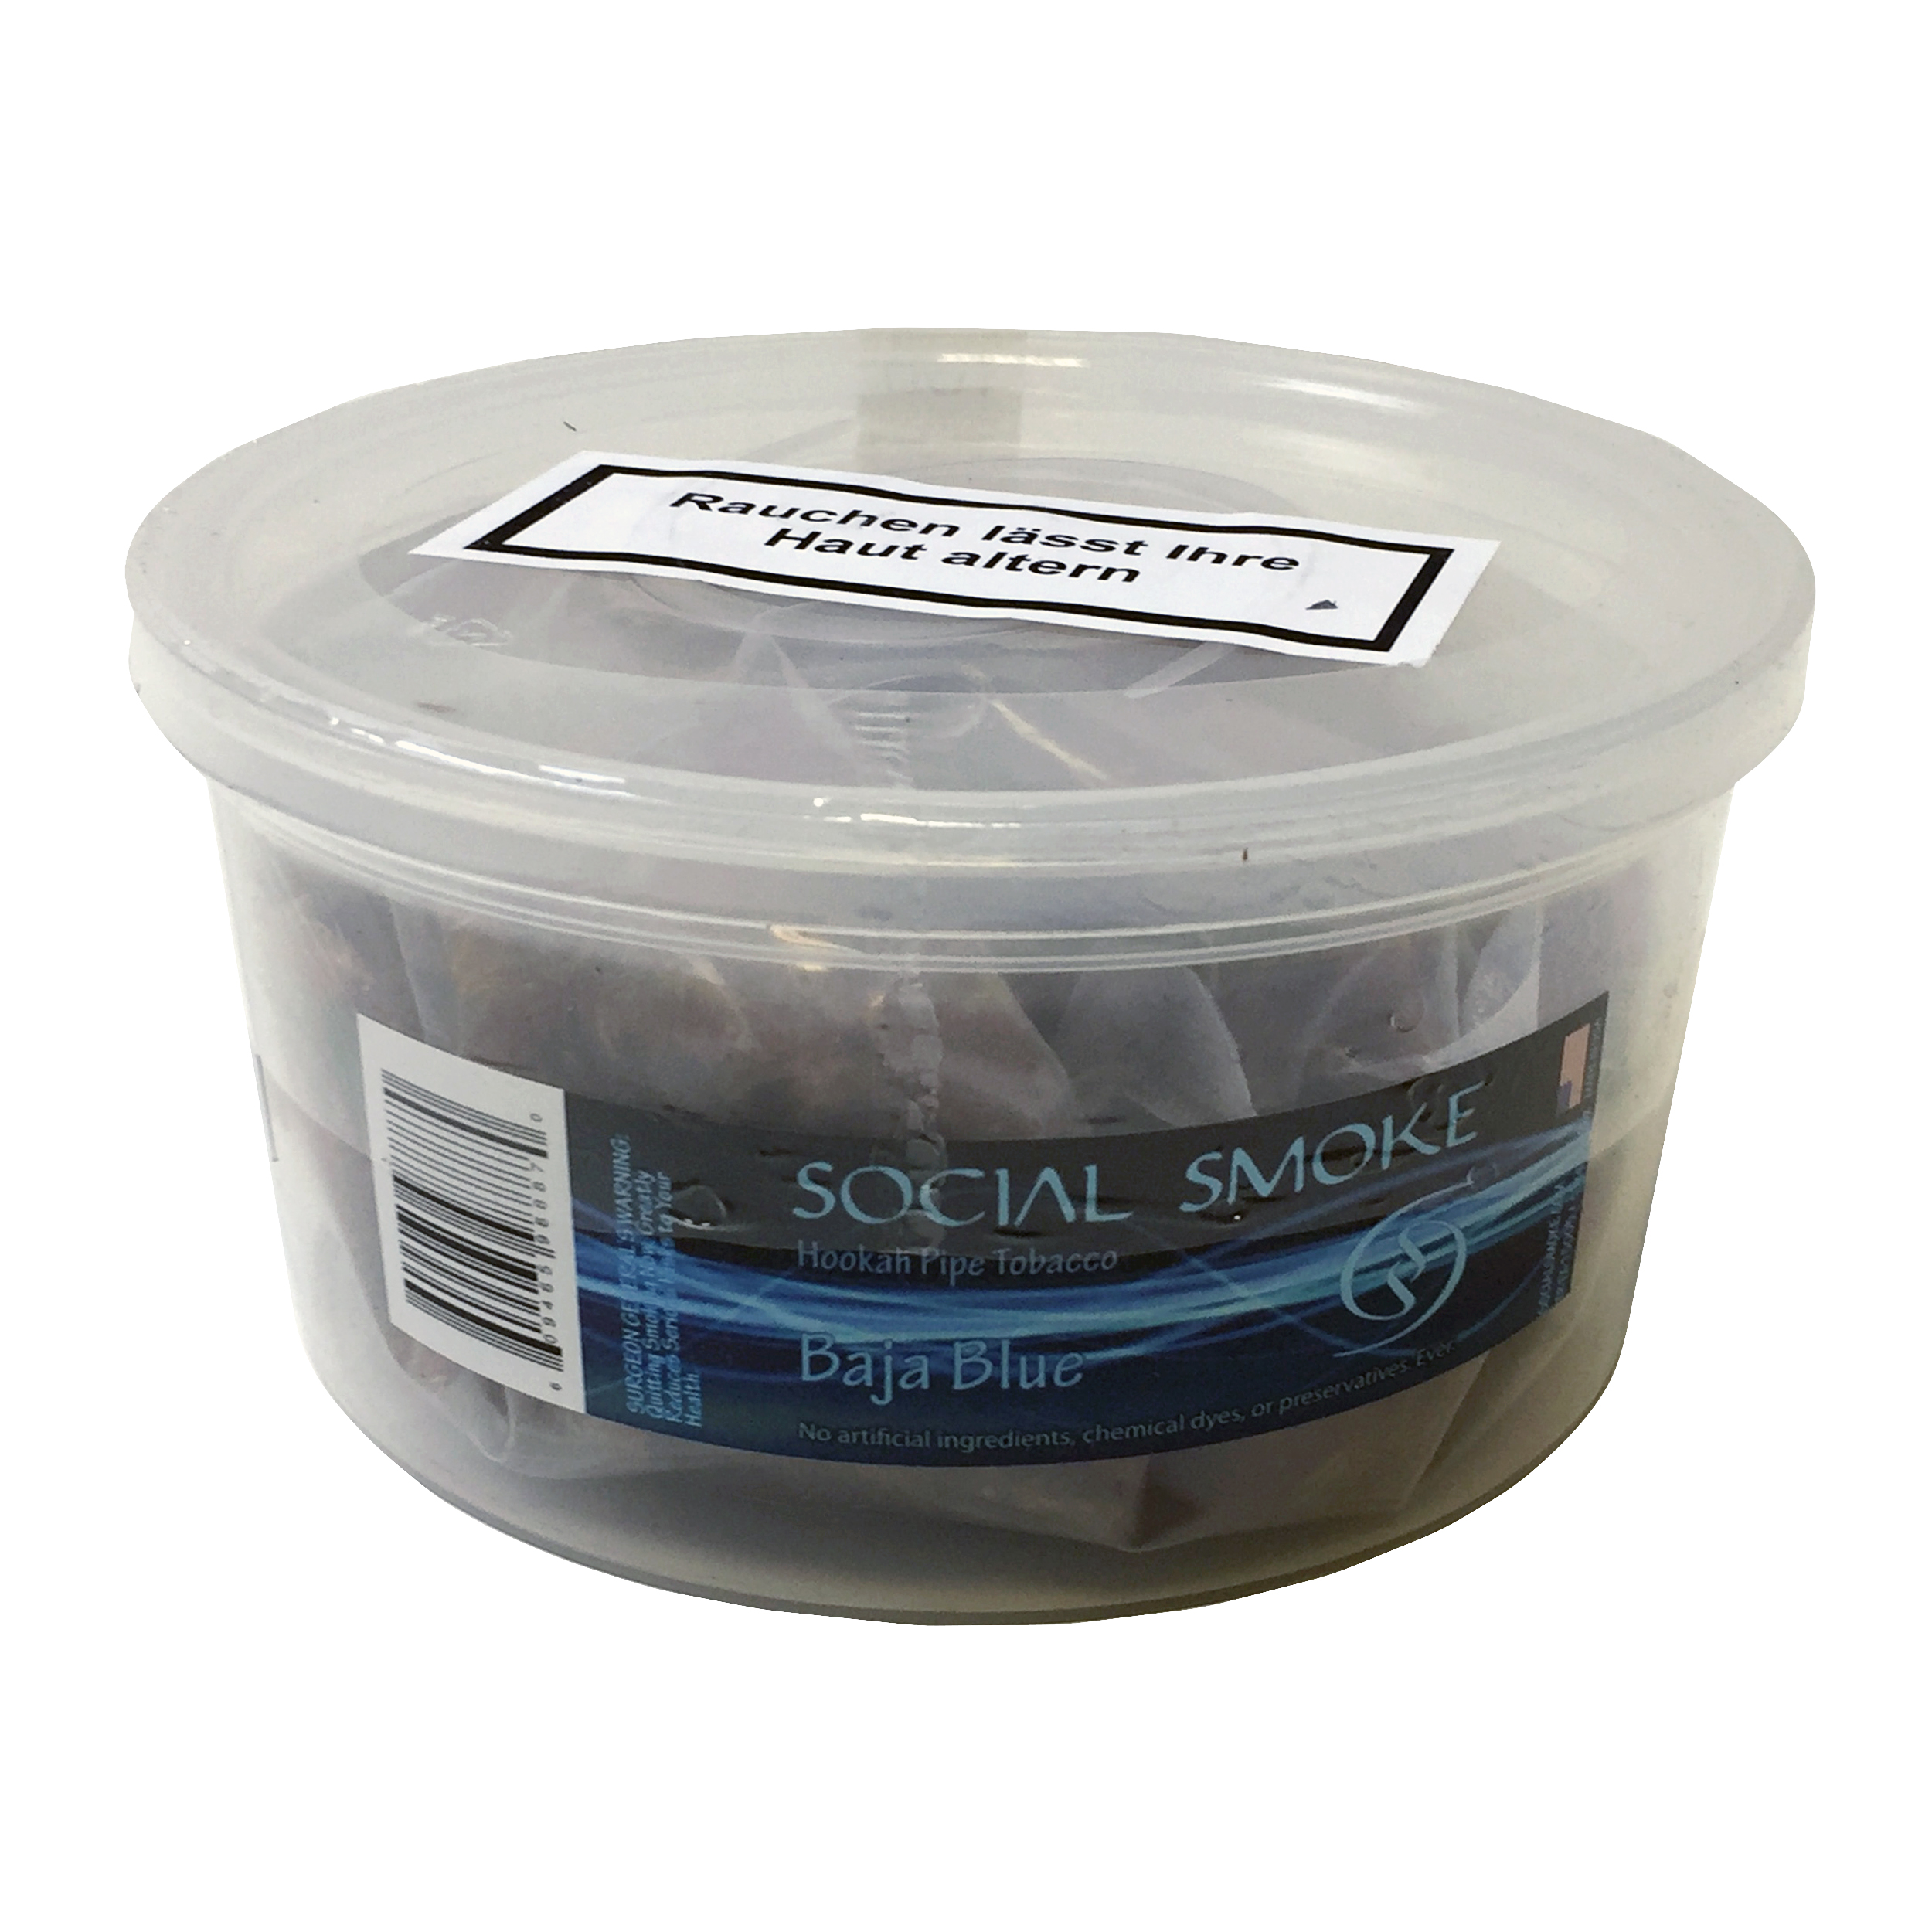 Social smoke baja blue